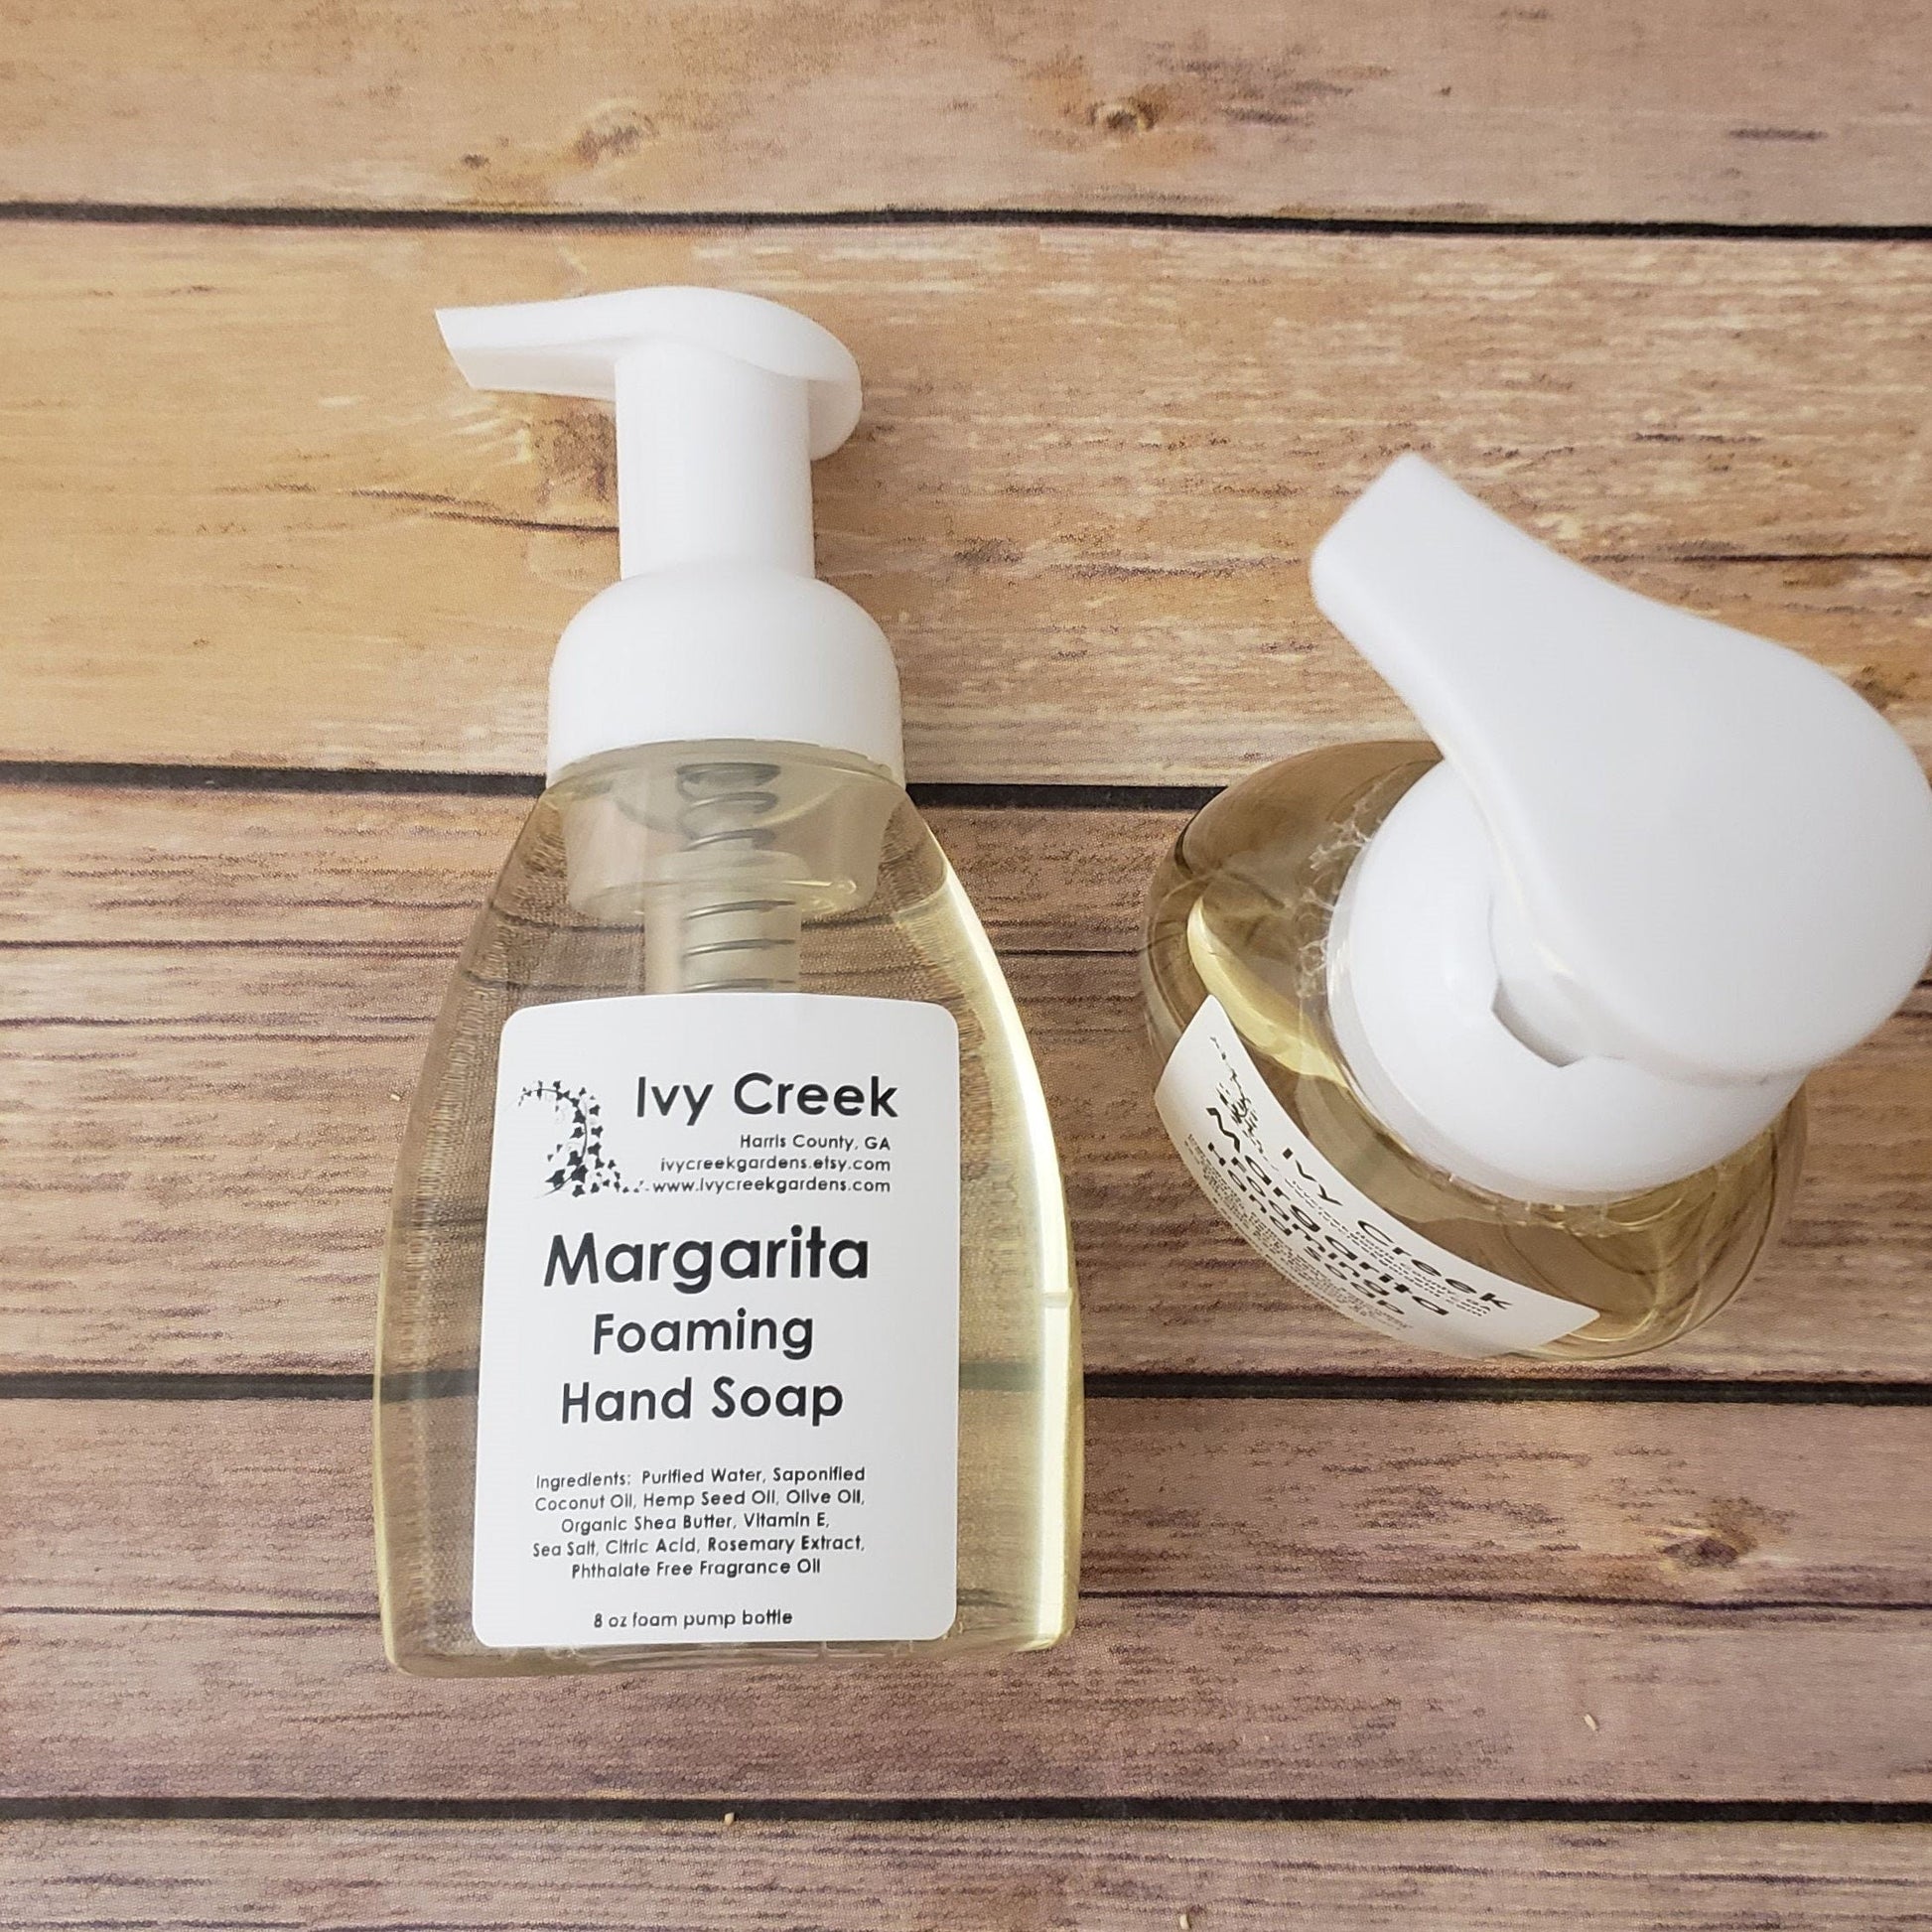 Ivy Creek Margarita Foaming Hand Soap | Refreshing Citrus Scent | Natural and Moisturizing | 8 oz